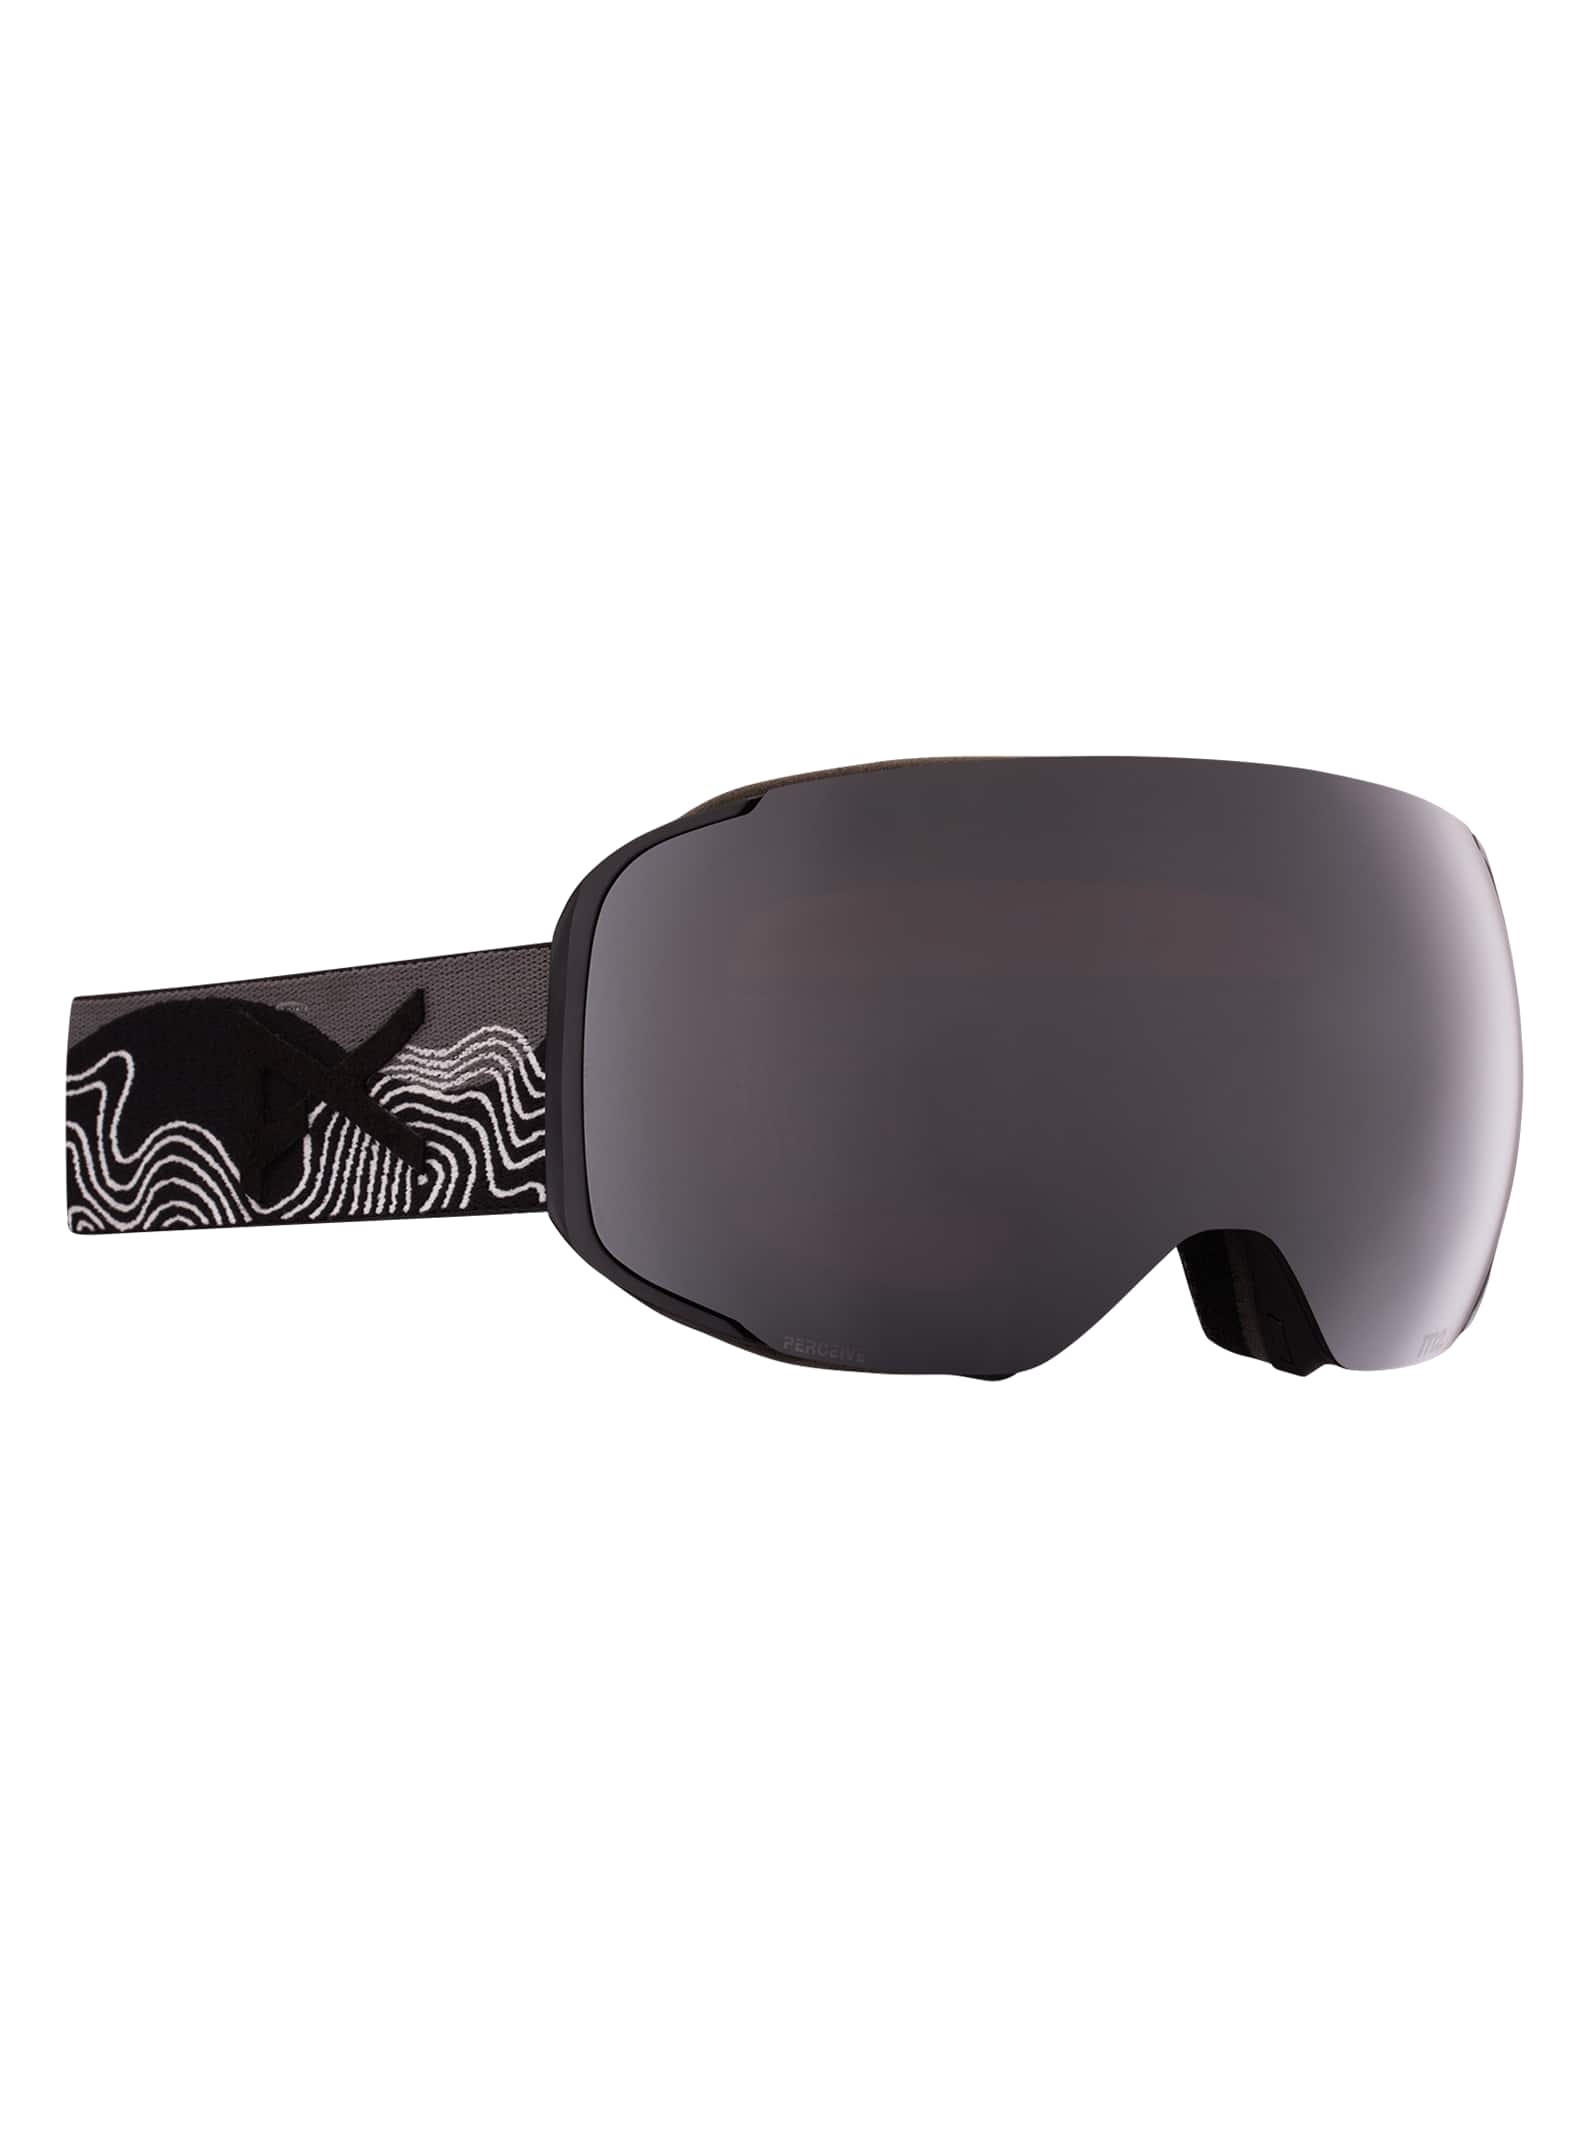 Anon Anon M2 Goggles + Bonus Lens + MFI® Face Mask Frame: atlas black, lens: perceive sunny onyx (6% / s4), spare lens: perceive variable violet (34% / s2)